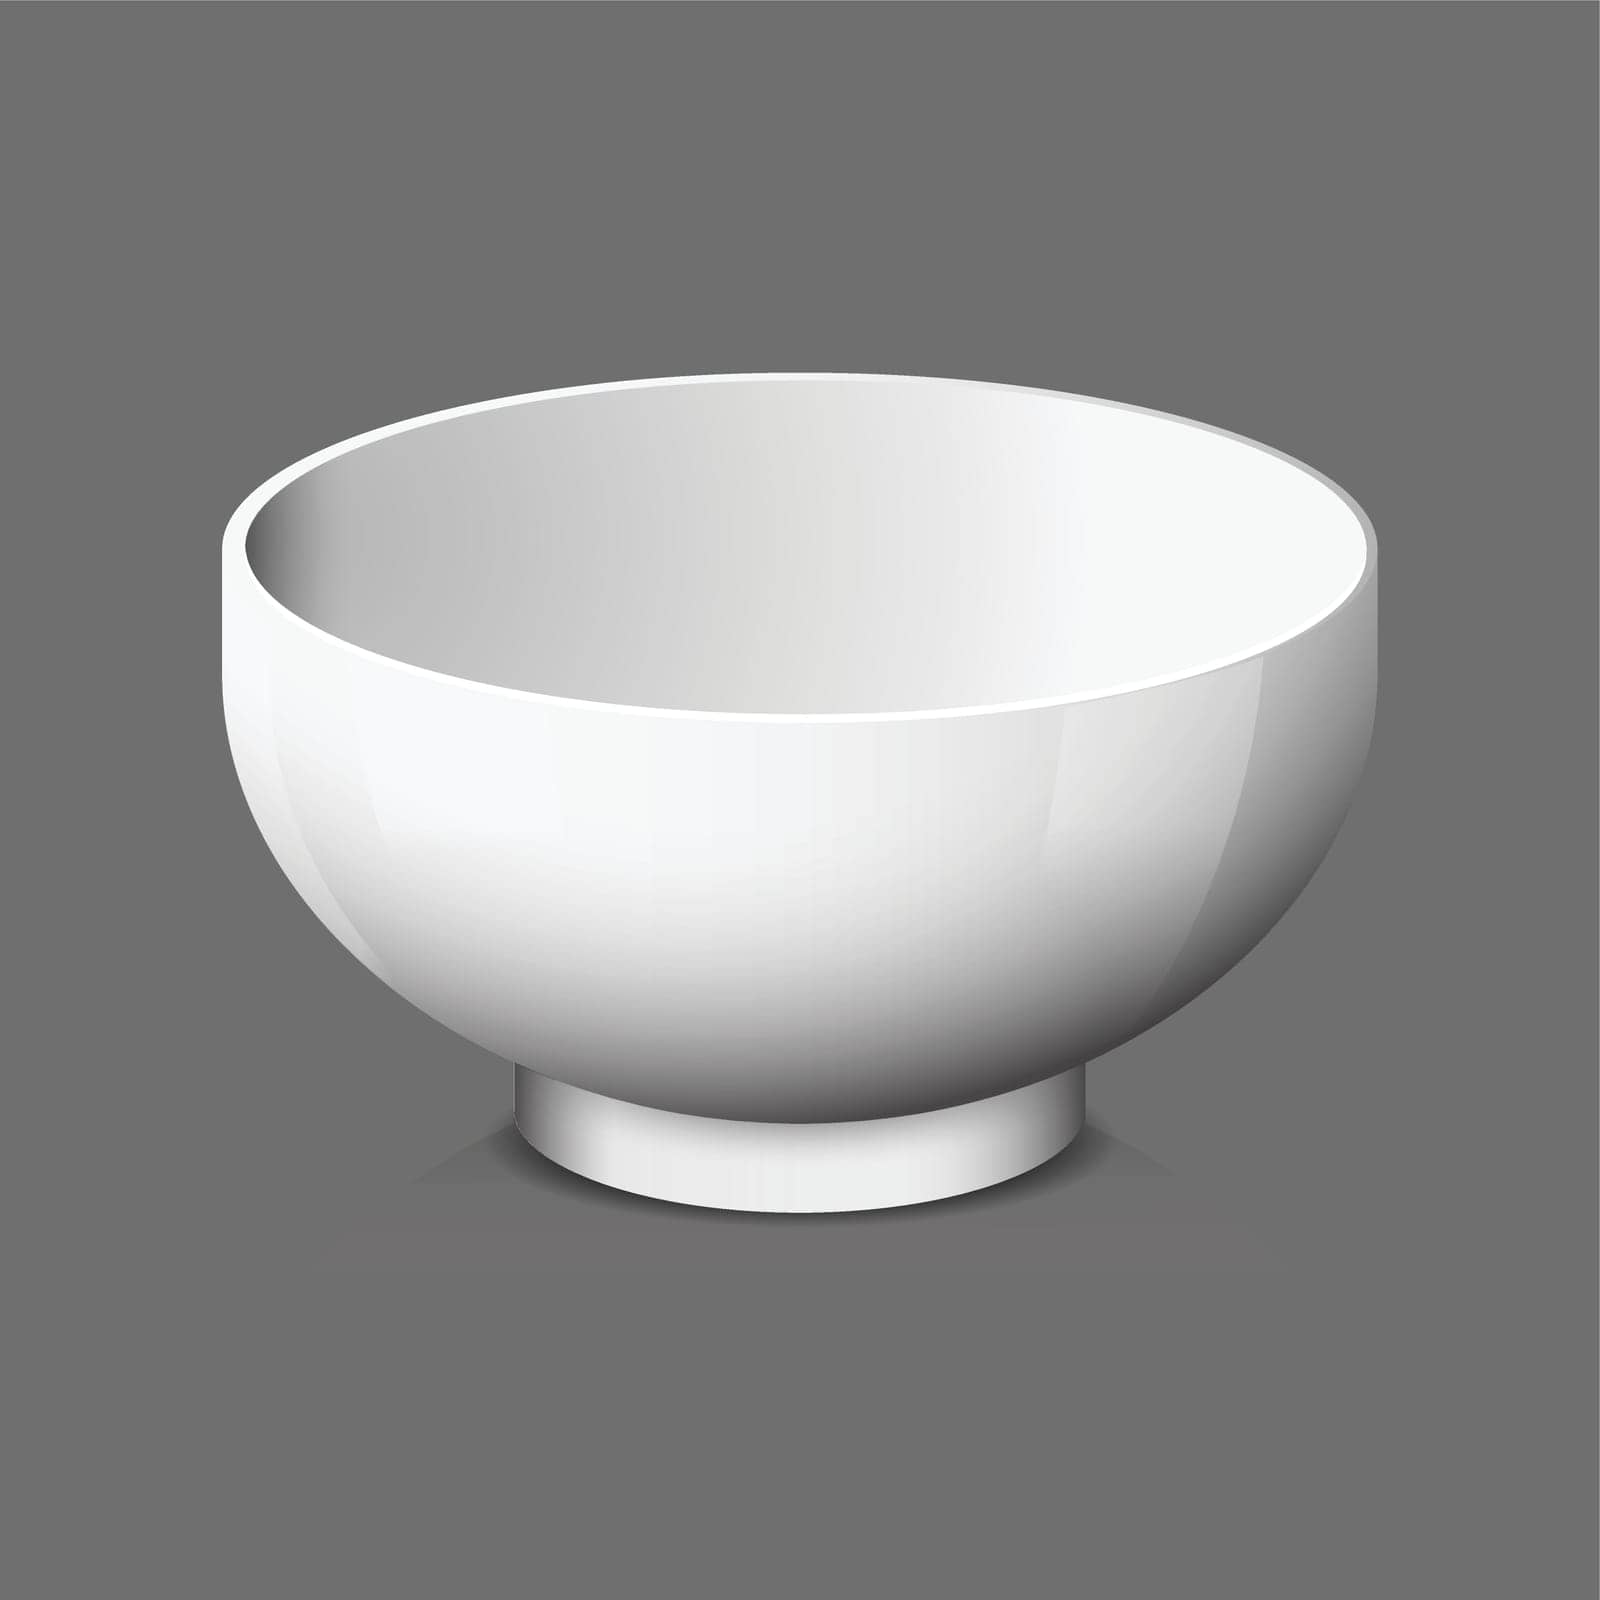 Porcelain bowl isolated illustration by Nutil